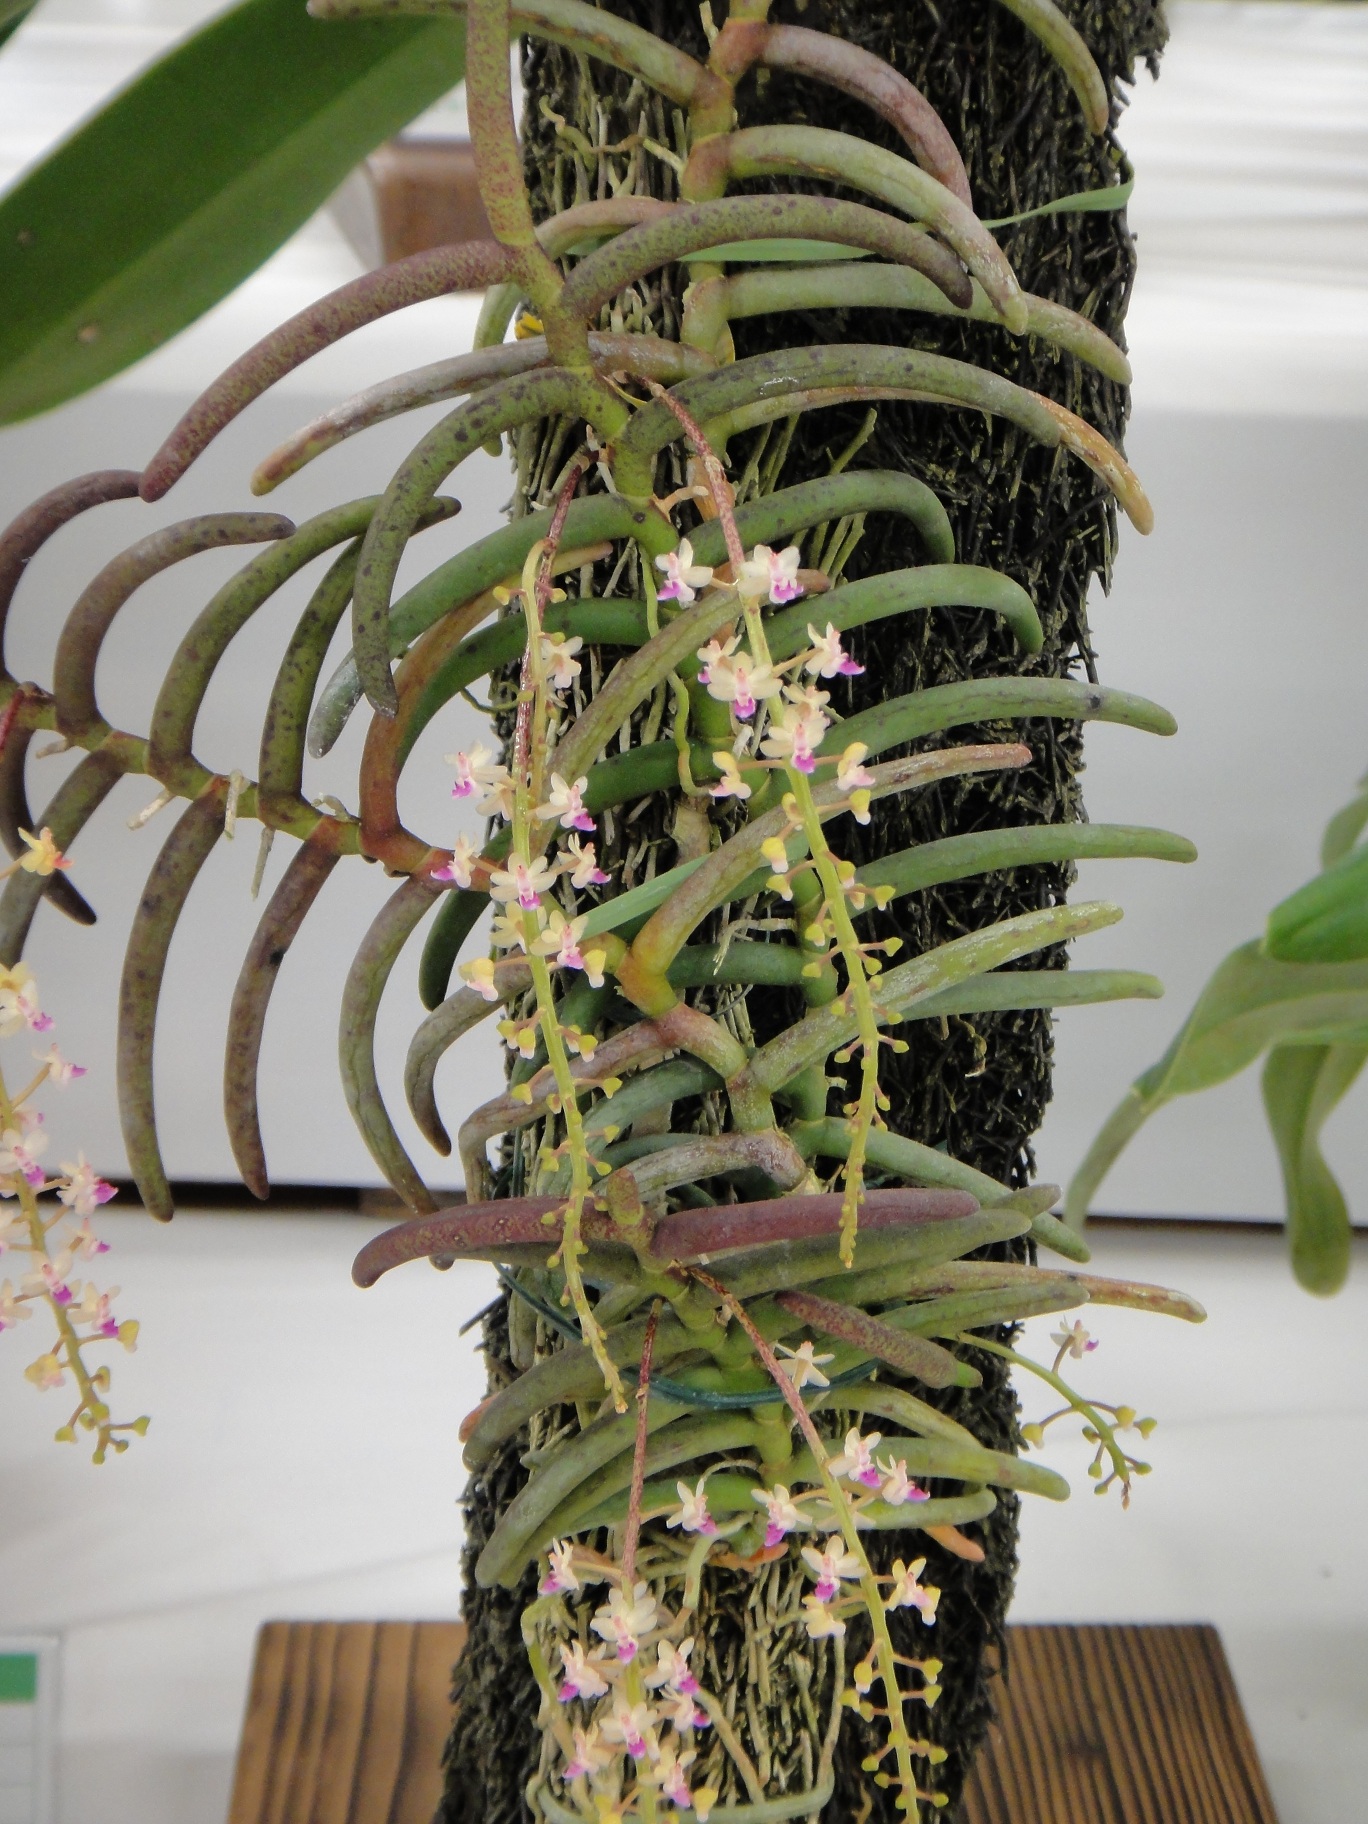 http://orchids.la.coocan.jp/Cleisostoma/Cleisostoma%20arietinum/DSC08798.JPG